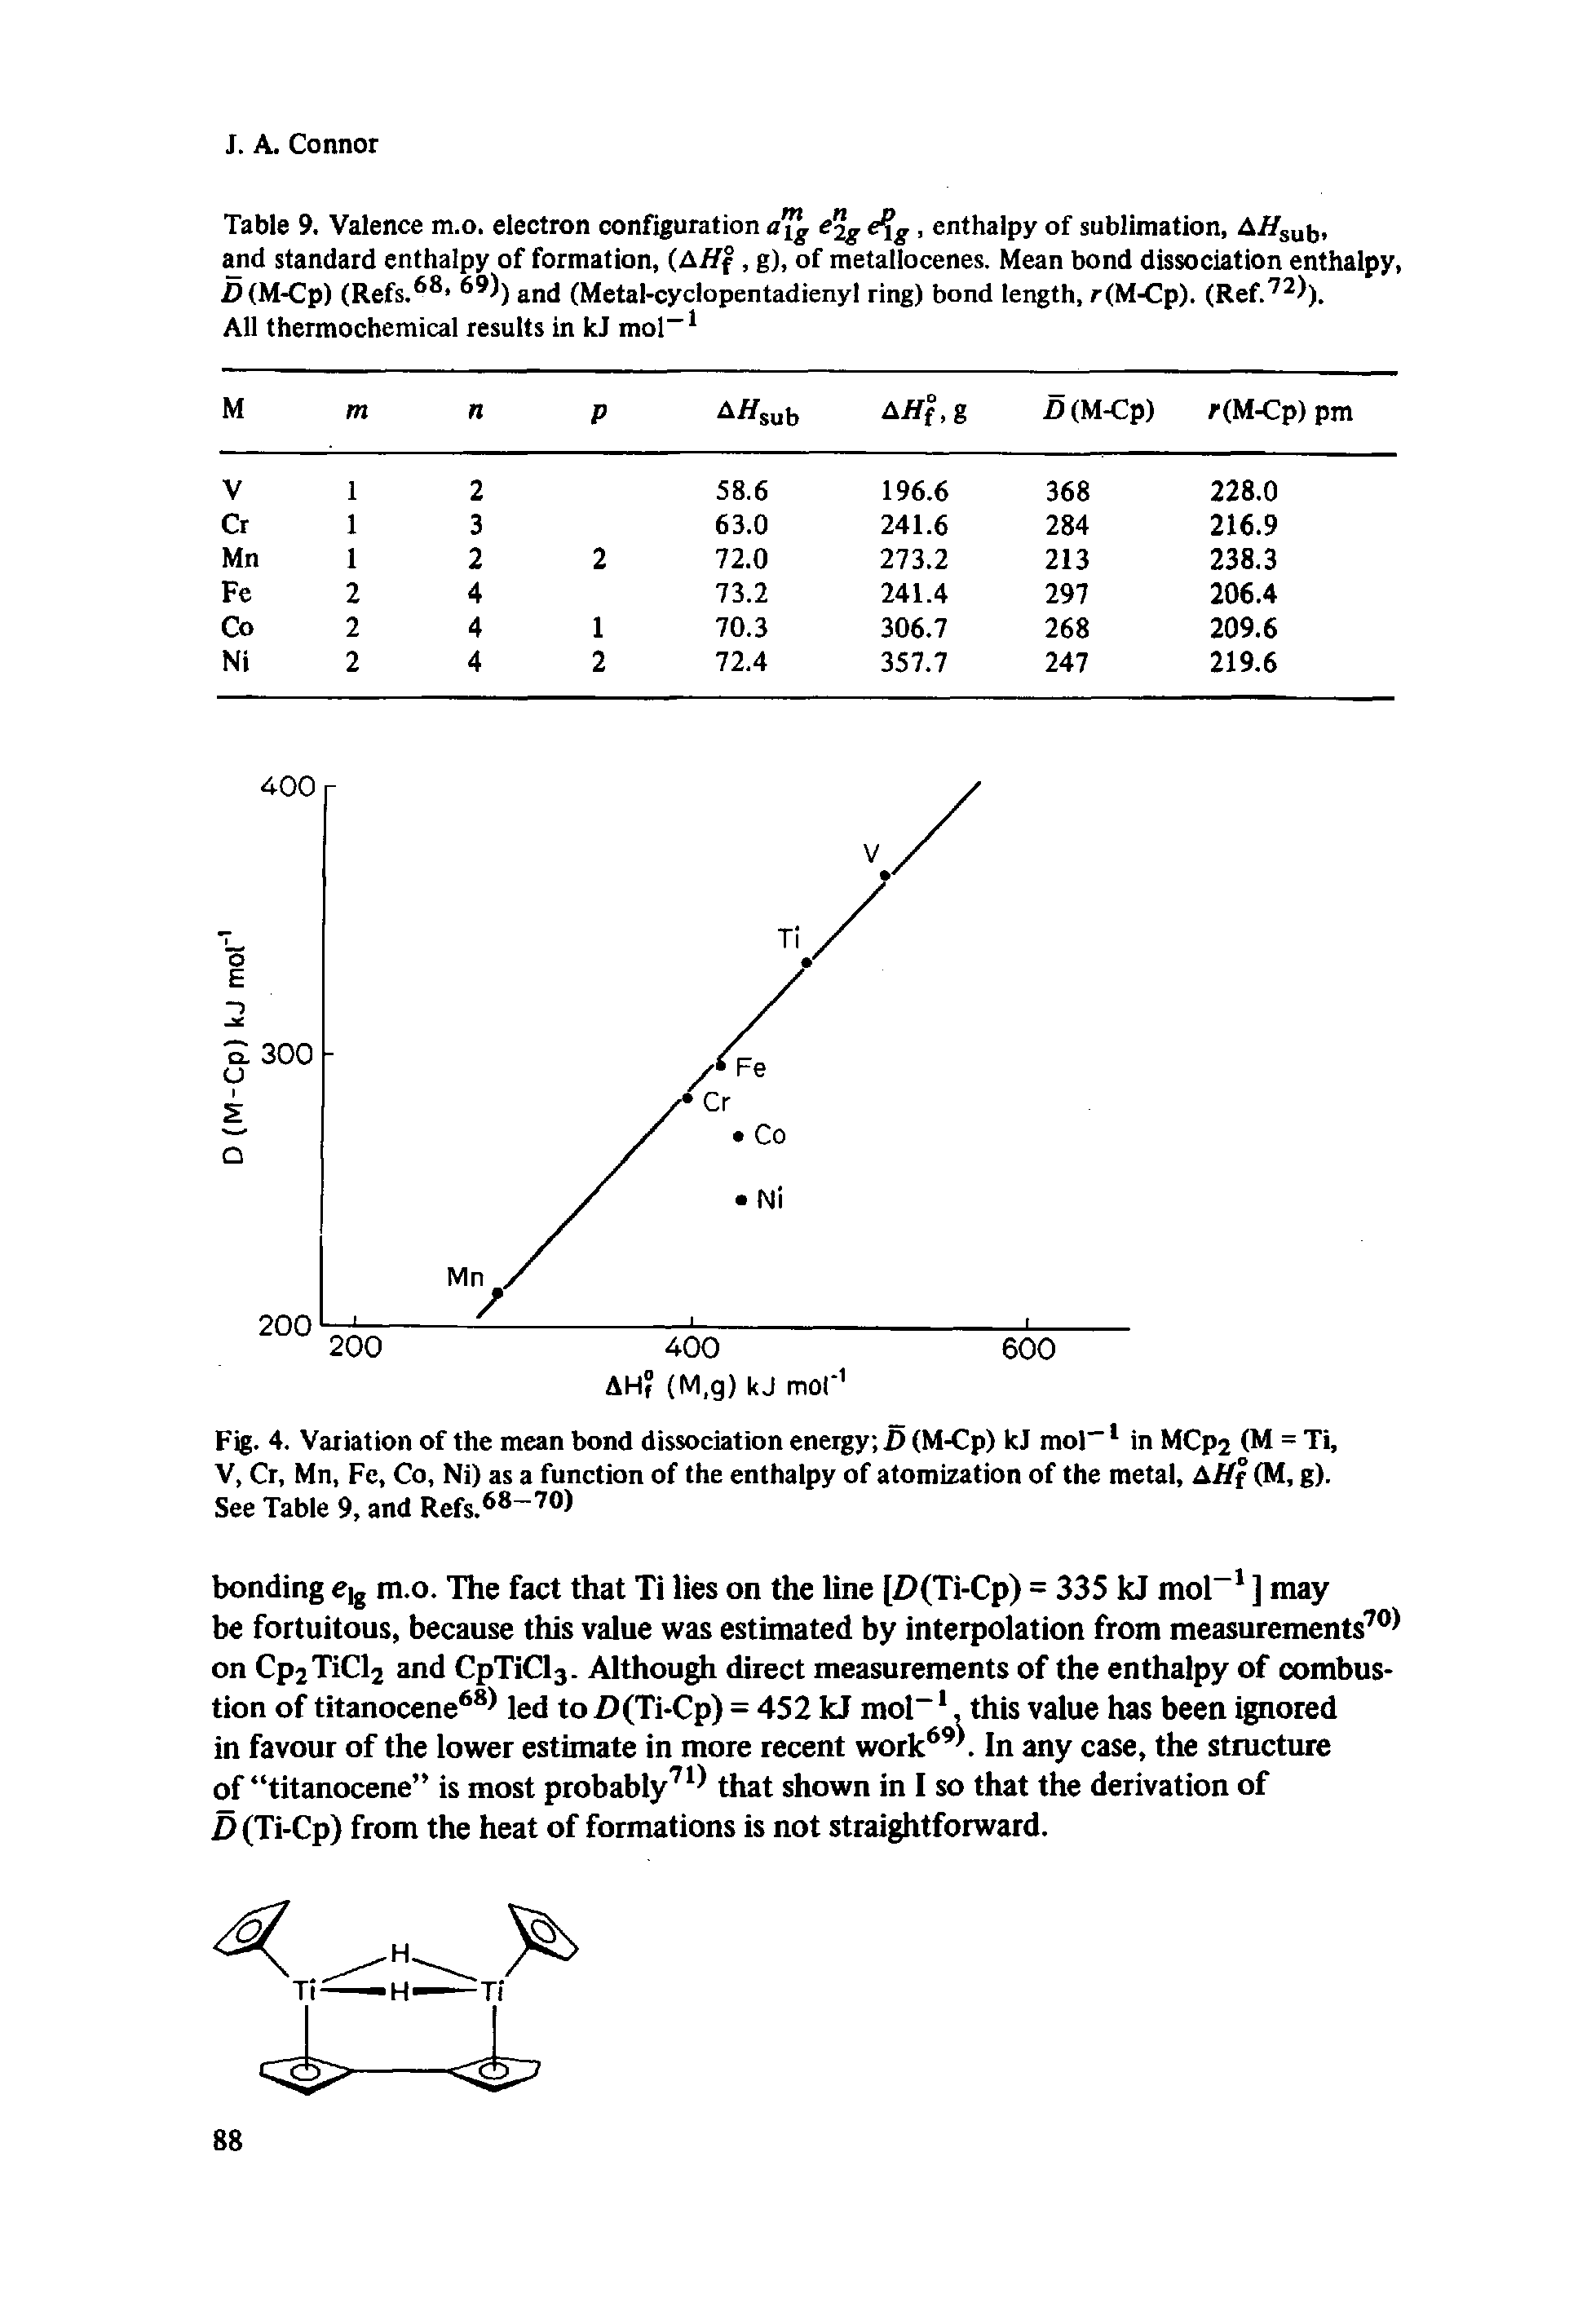 Fig. 4. Variation of the mean bond dissociation energy D (M-Cp) kJ mol-1 in MCp2 (M = Ti,...